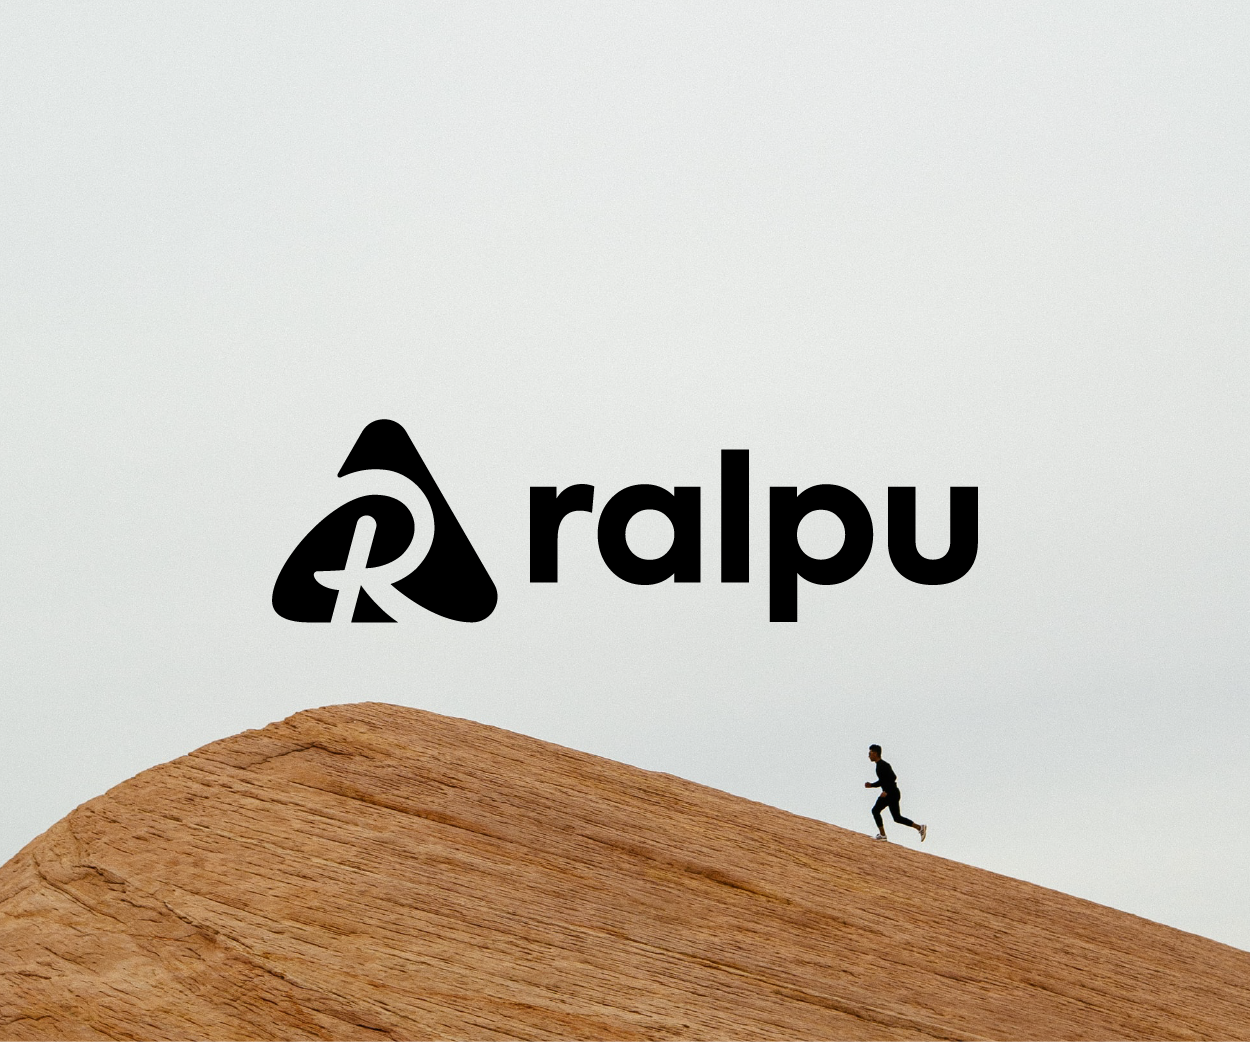 Ralpu e-shop Logo Design Image